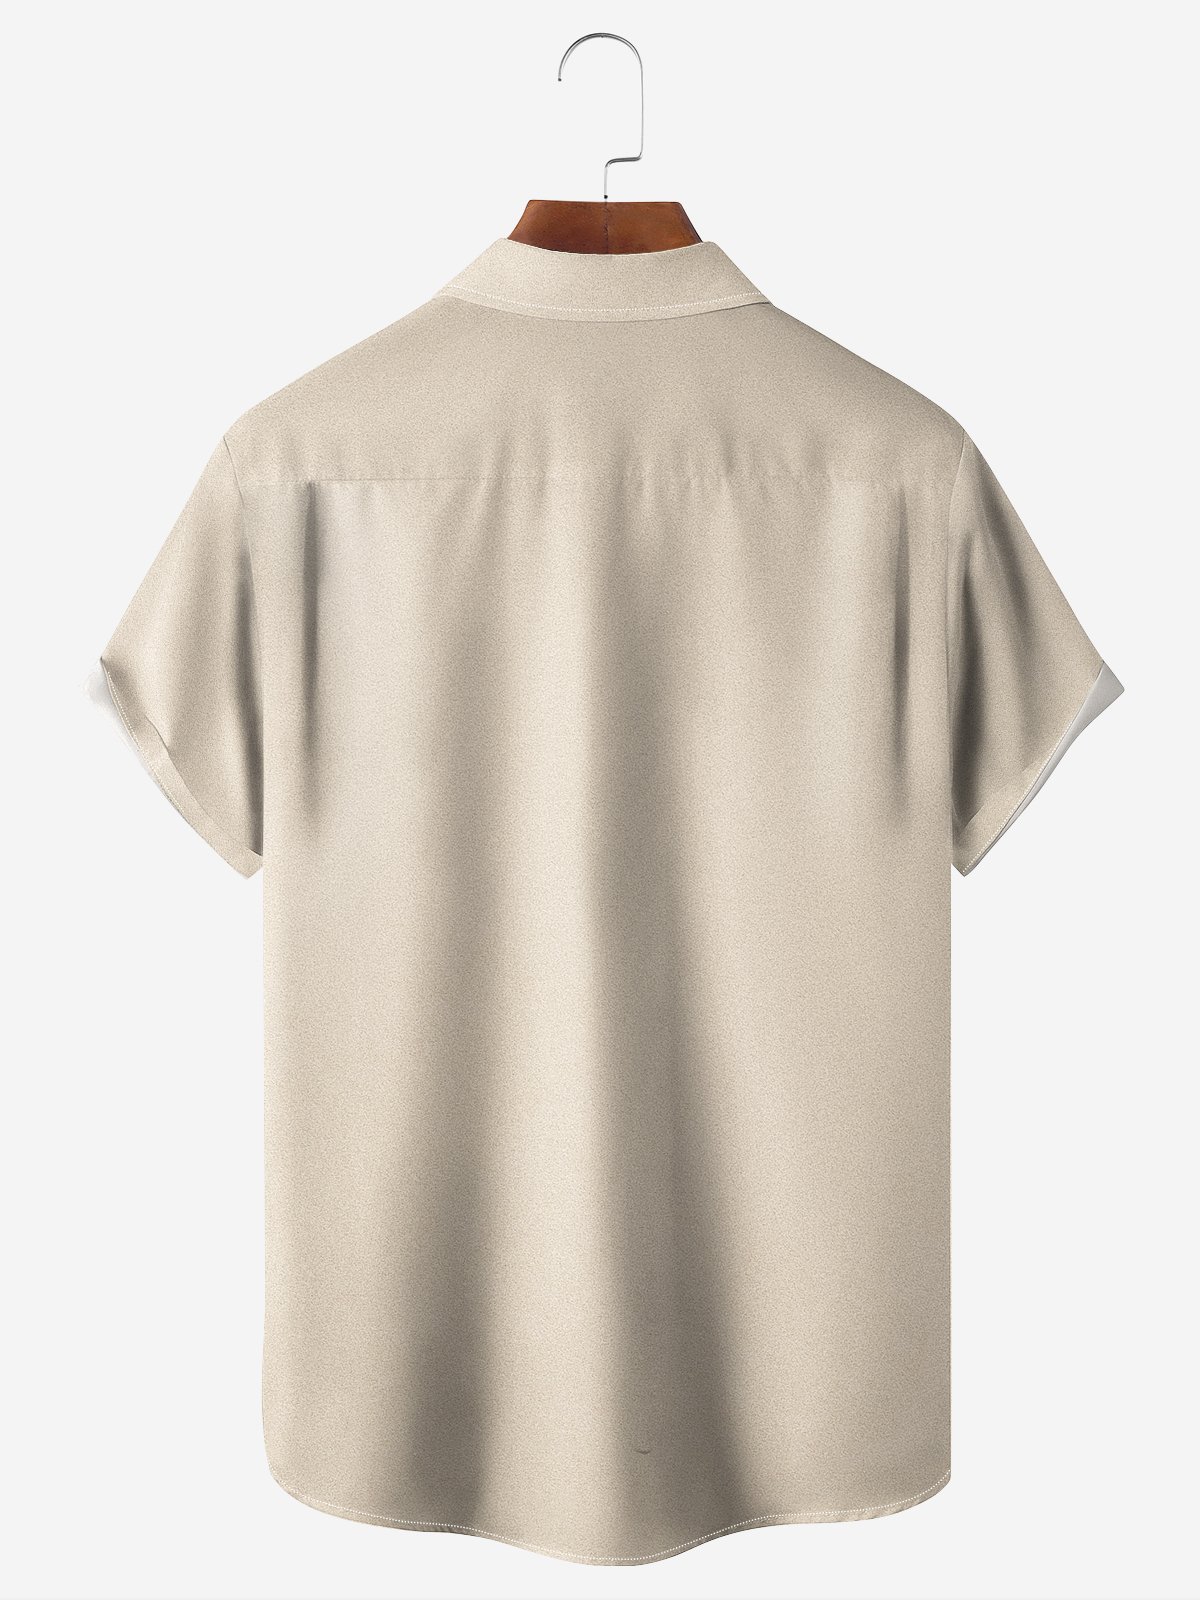 Hardaddy Cactus Chest Pocket Short Sleeve Bowling Shirt